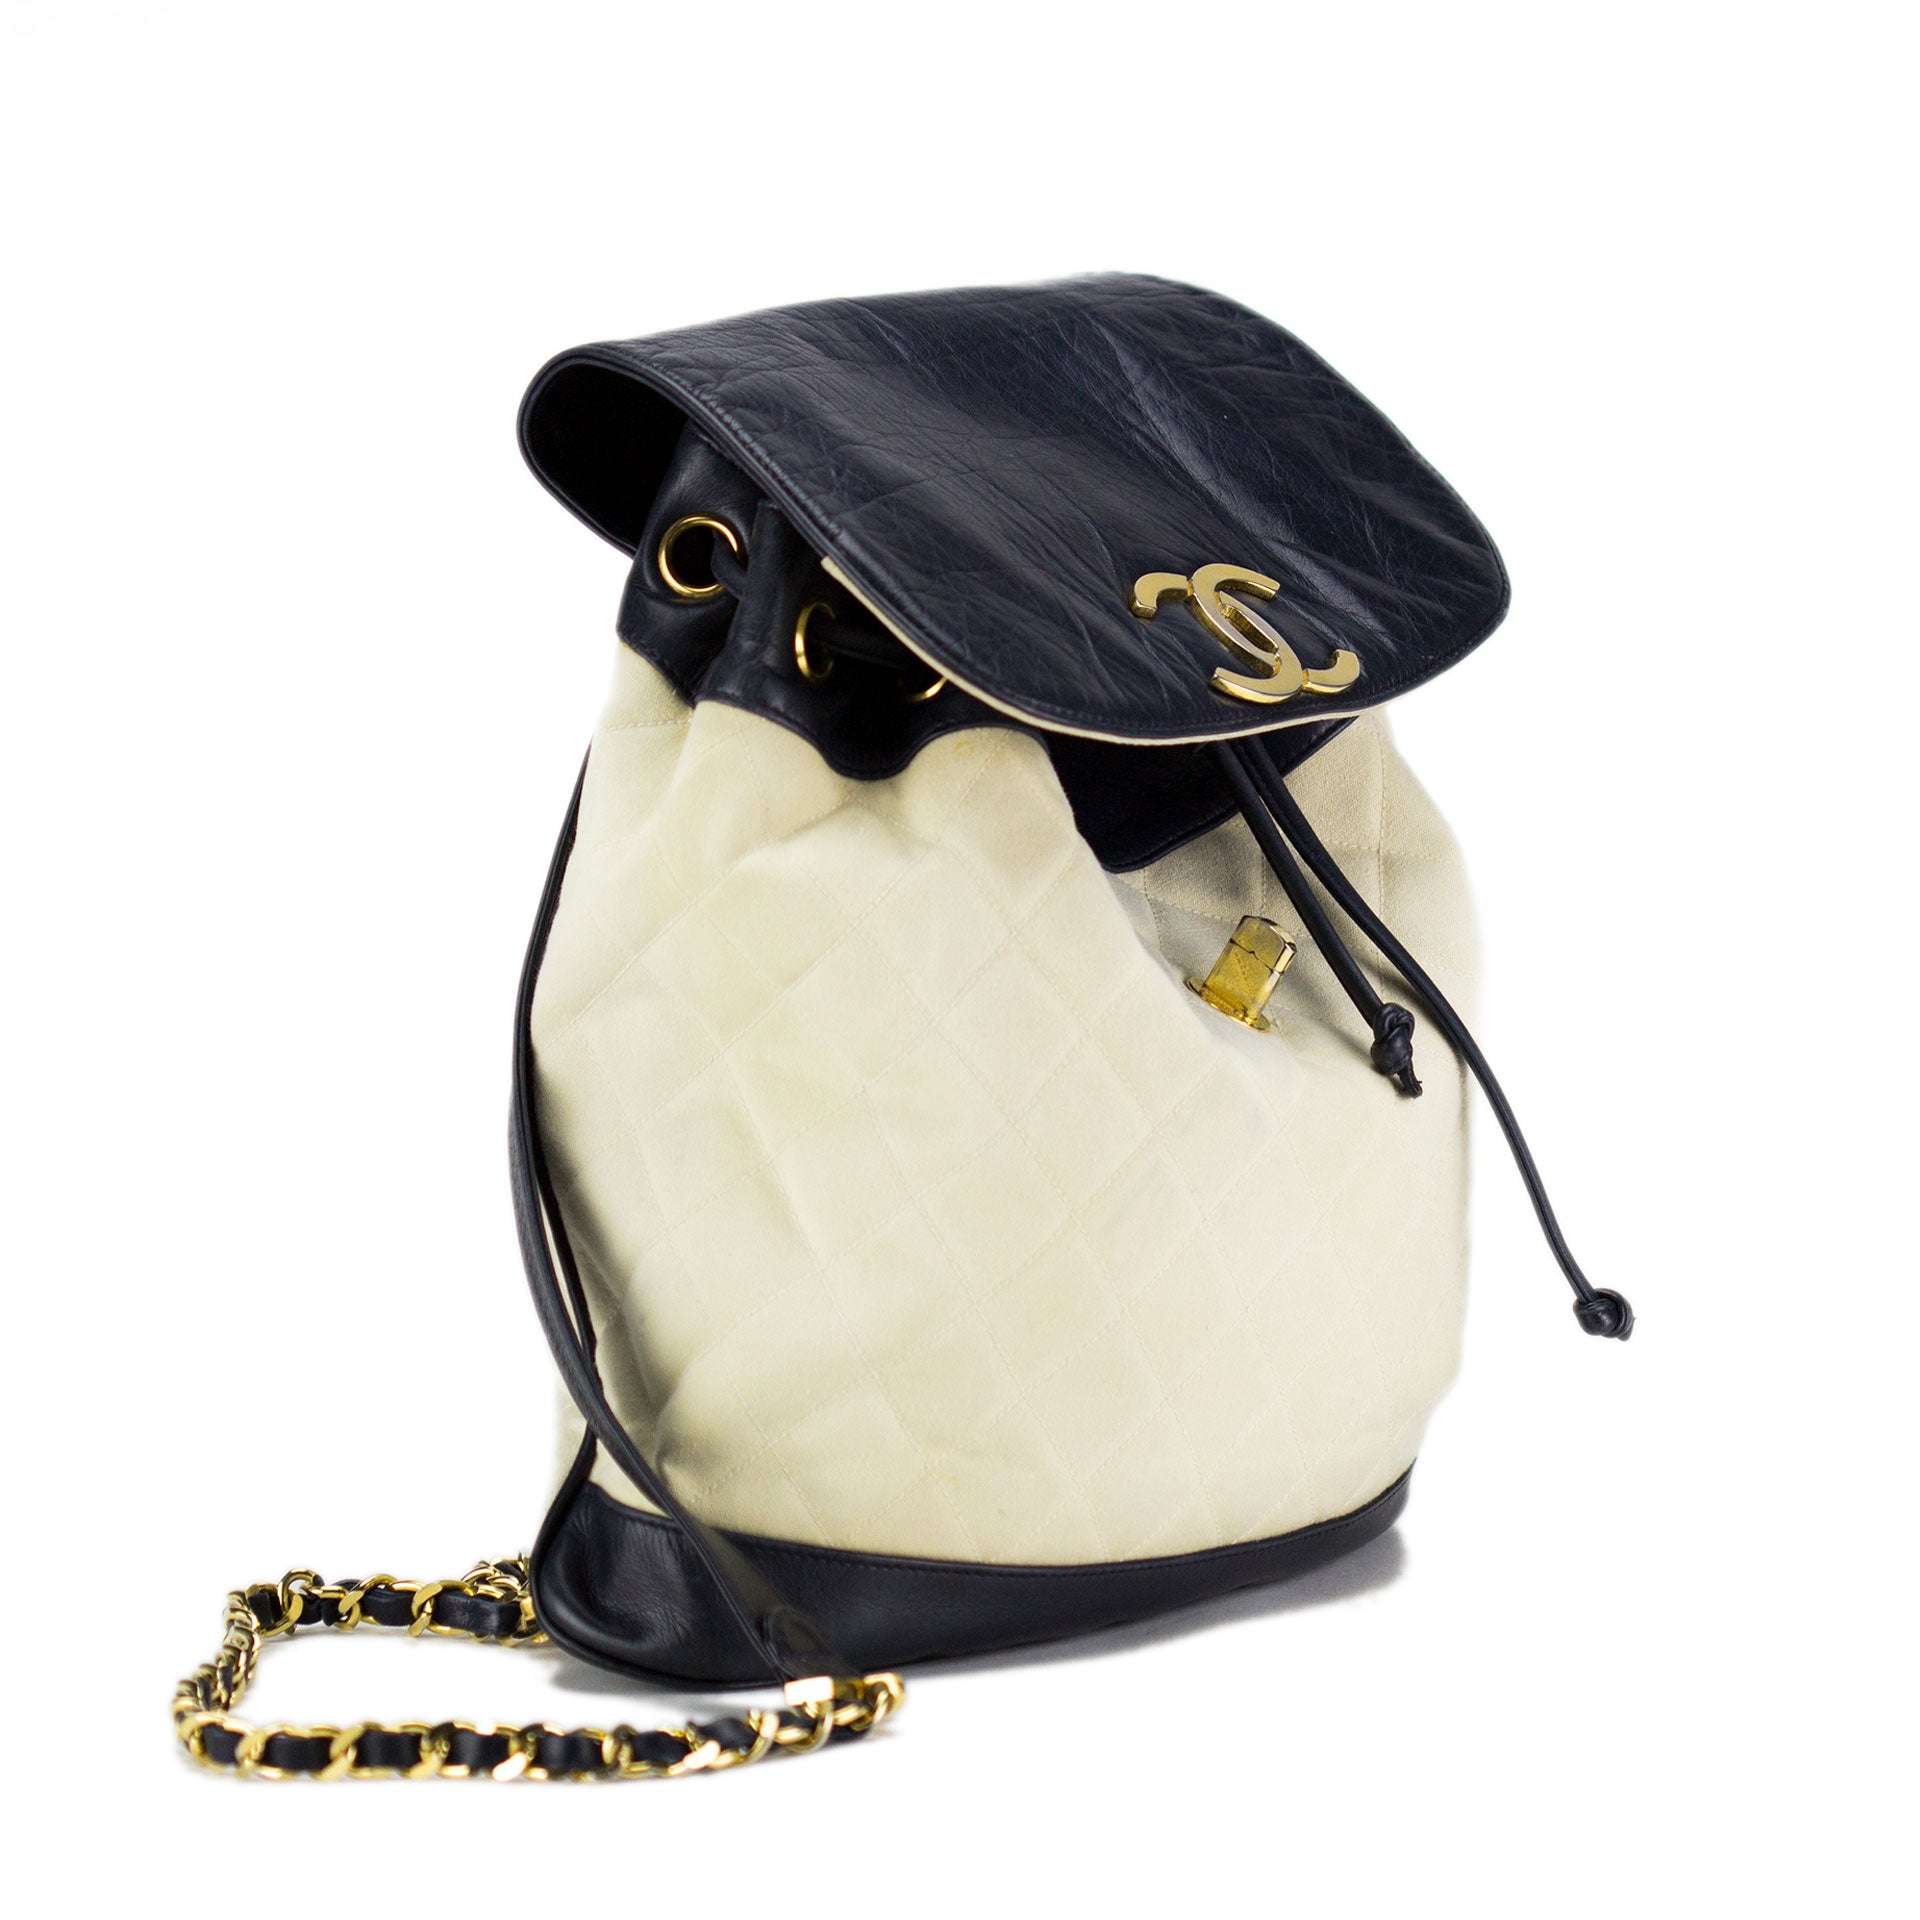 black chanel backpack purse